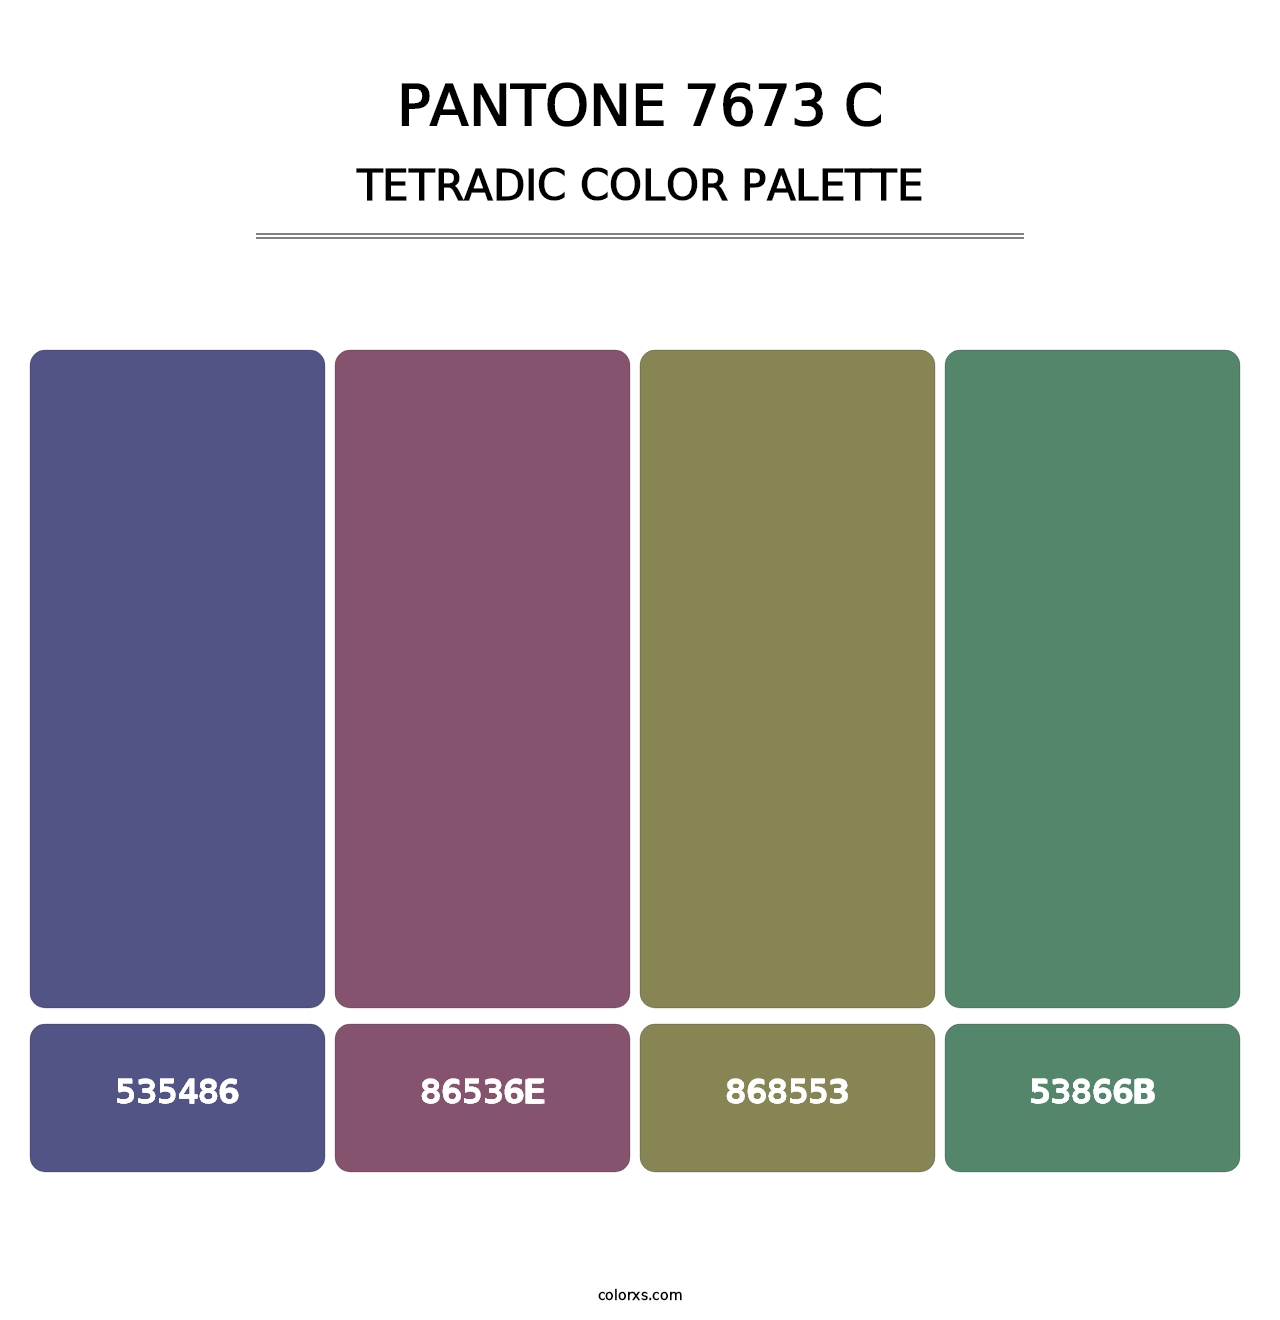 PANTONE 7673 C - Tetradic Color Palette